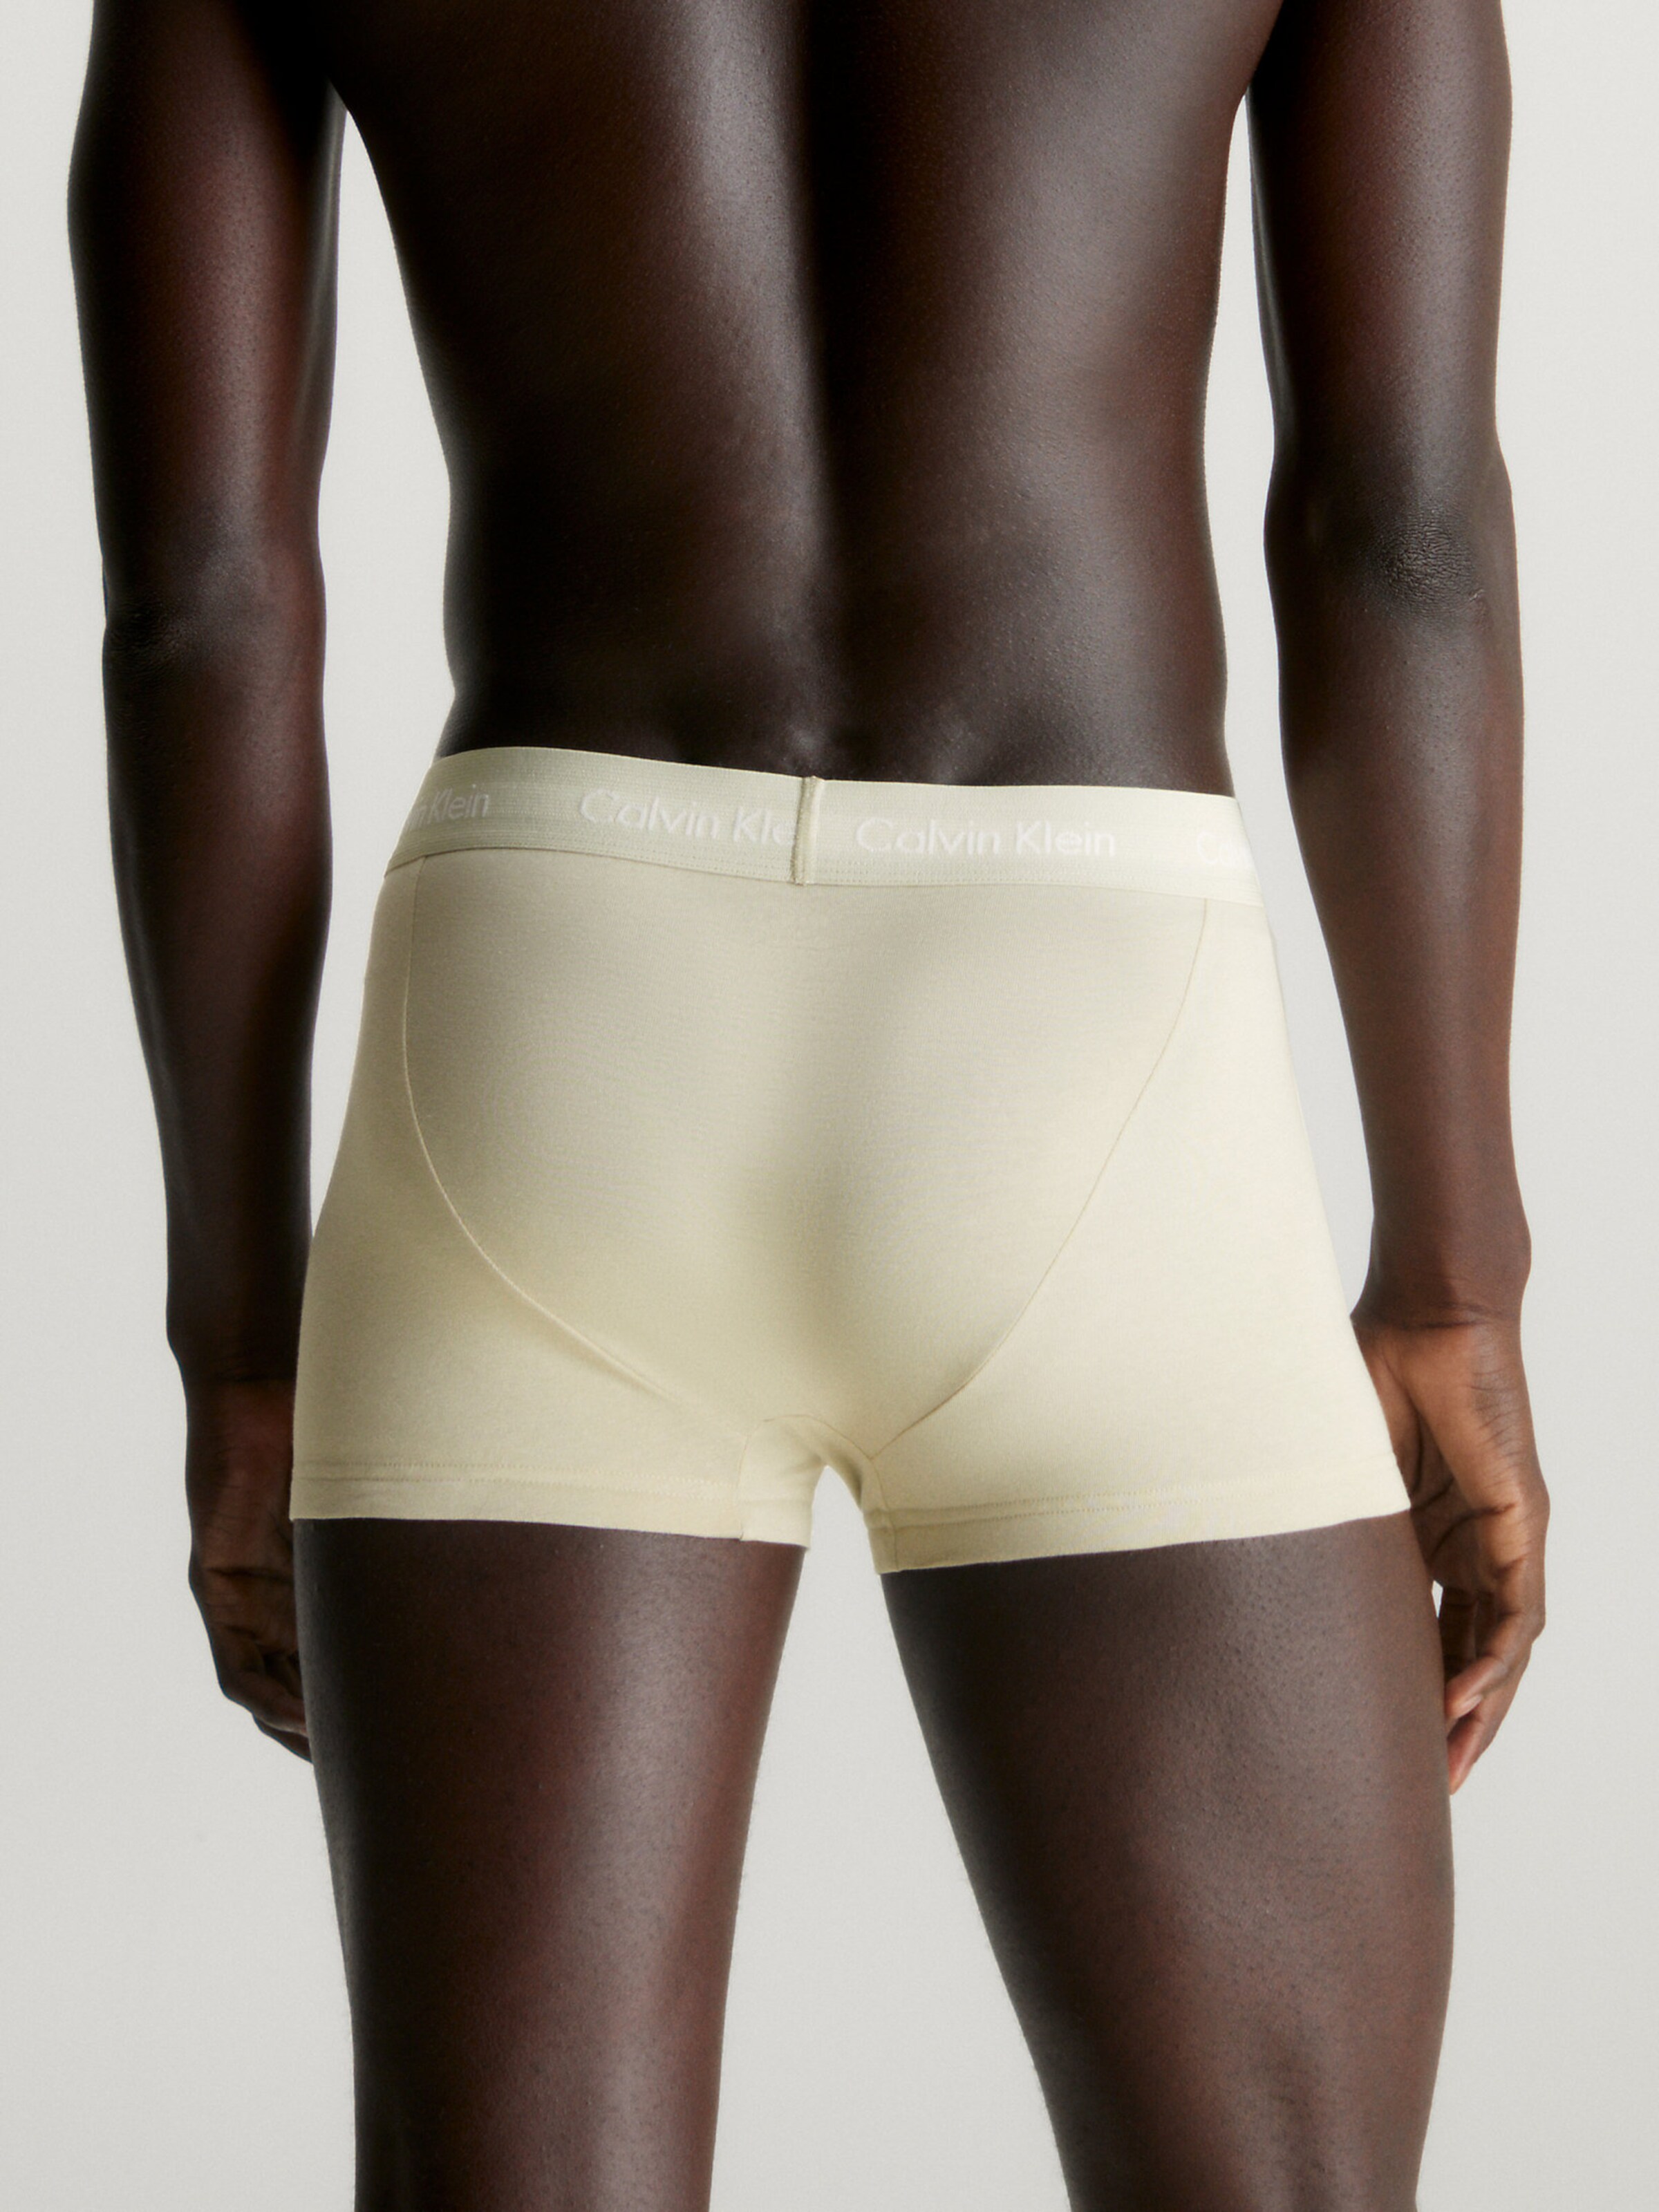 Calvin Klein Underwear Boxers em Bege, Antracite, Laranja, Fúcsia, Preto